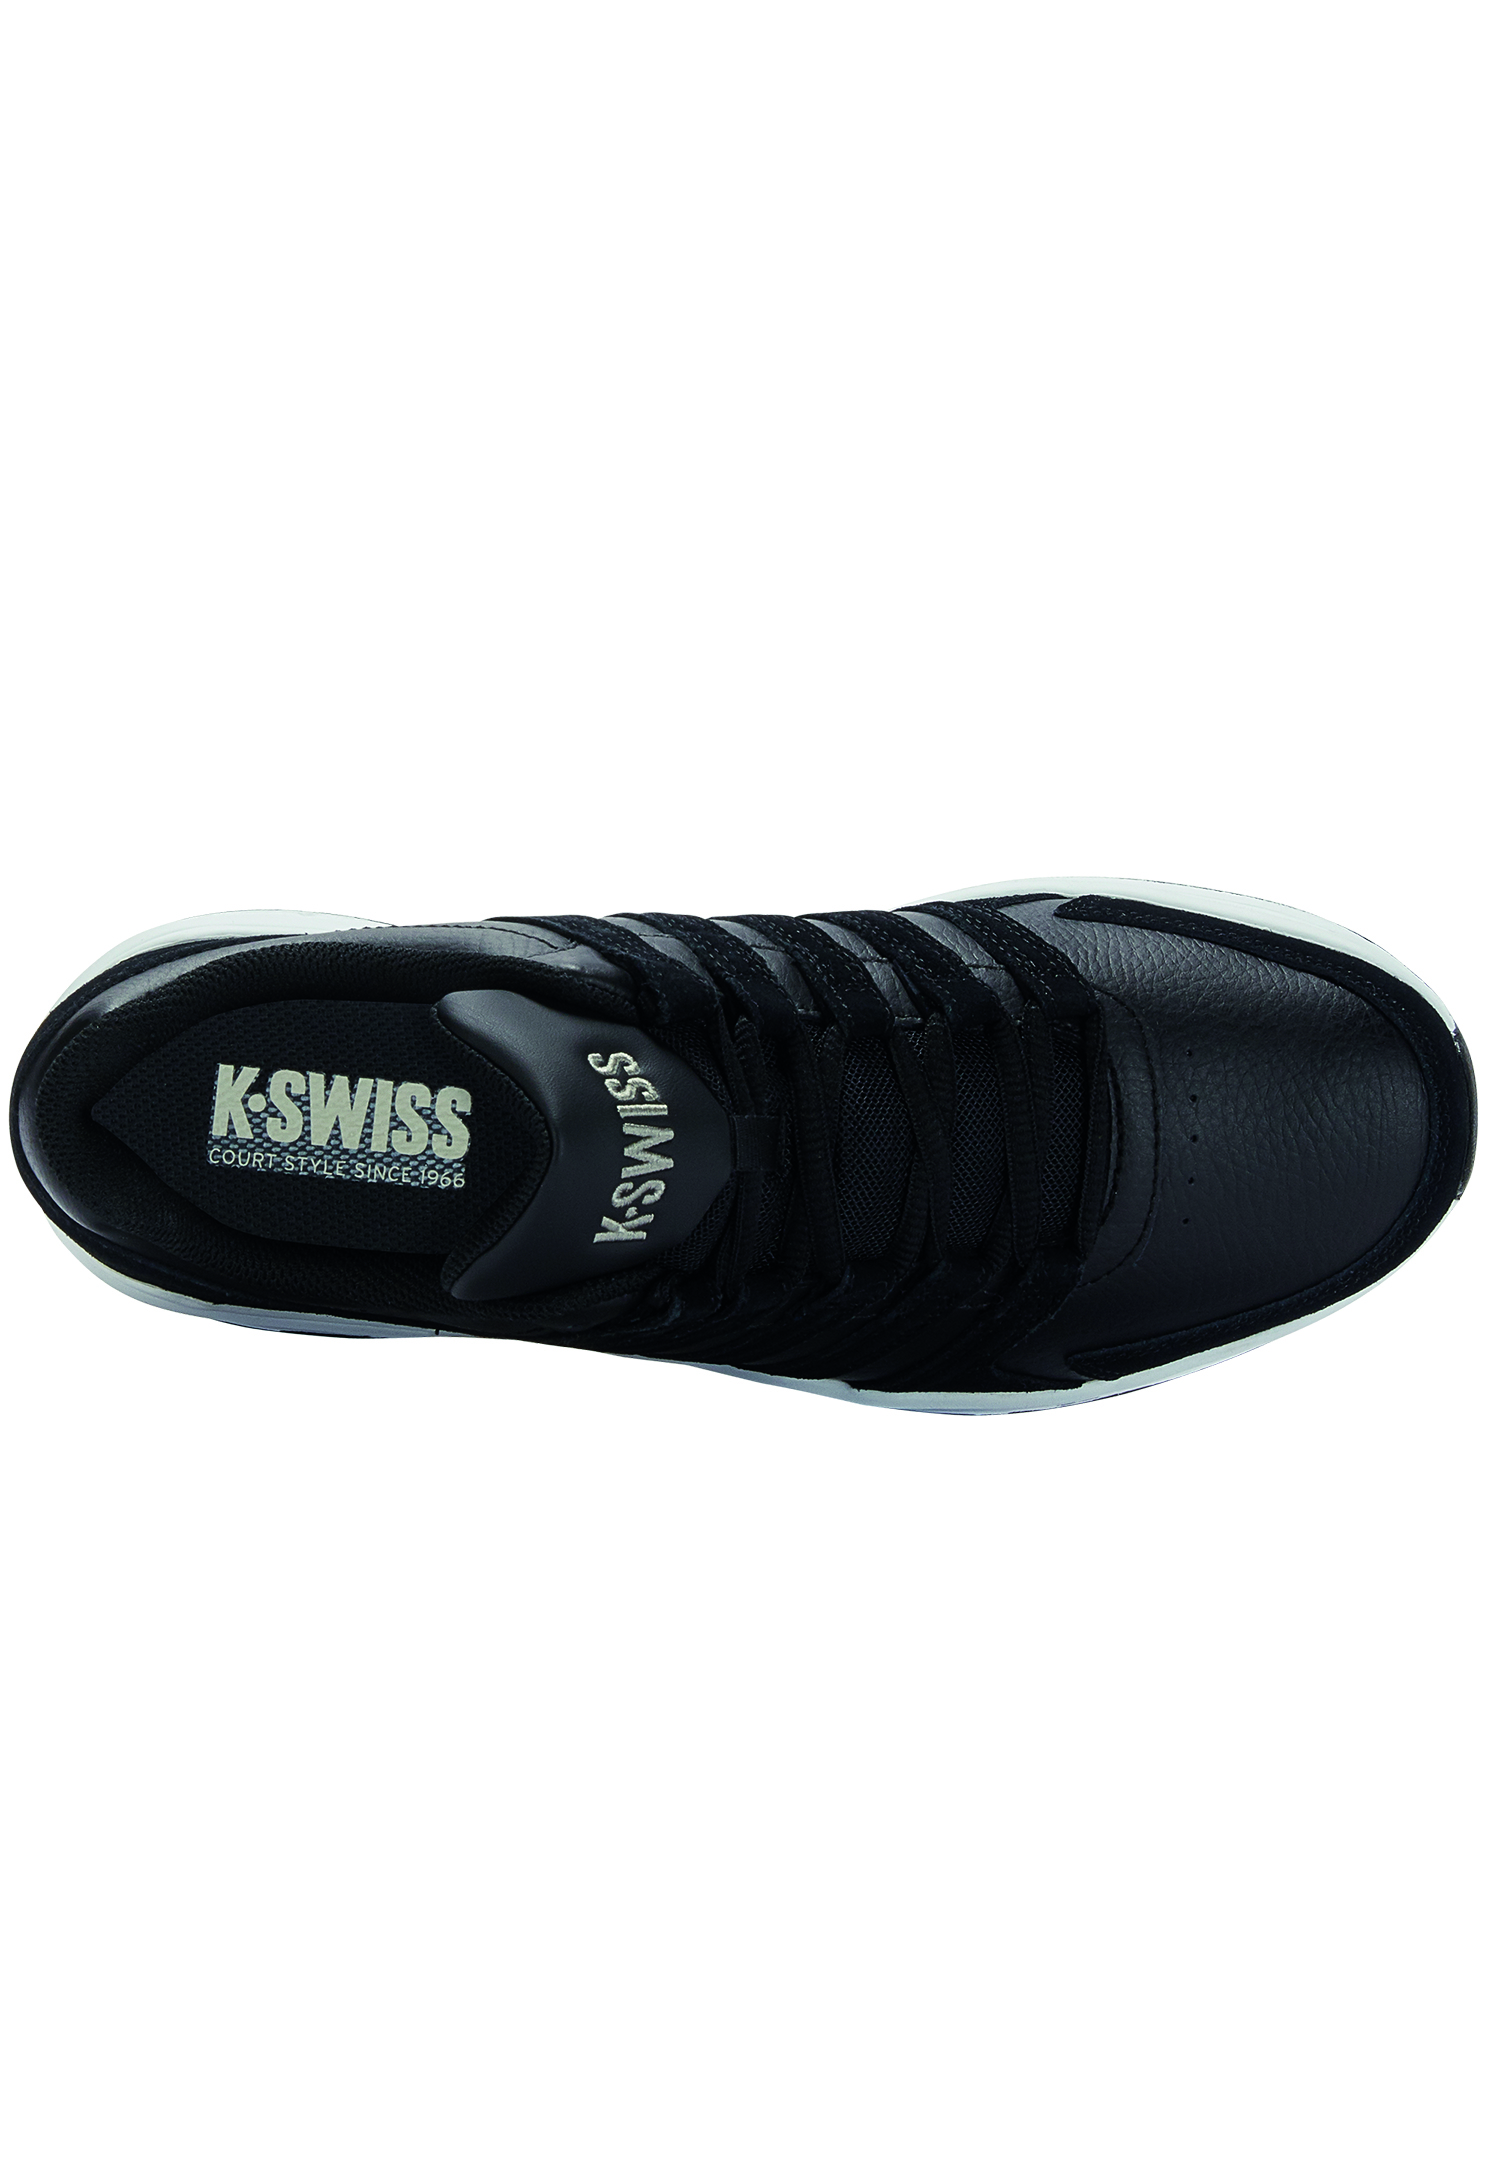 K-Swiss Vista Trainer T Herren Sneaker Sportschuh 07000-058-M schwarz